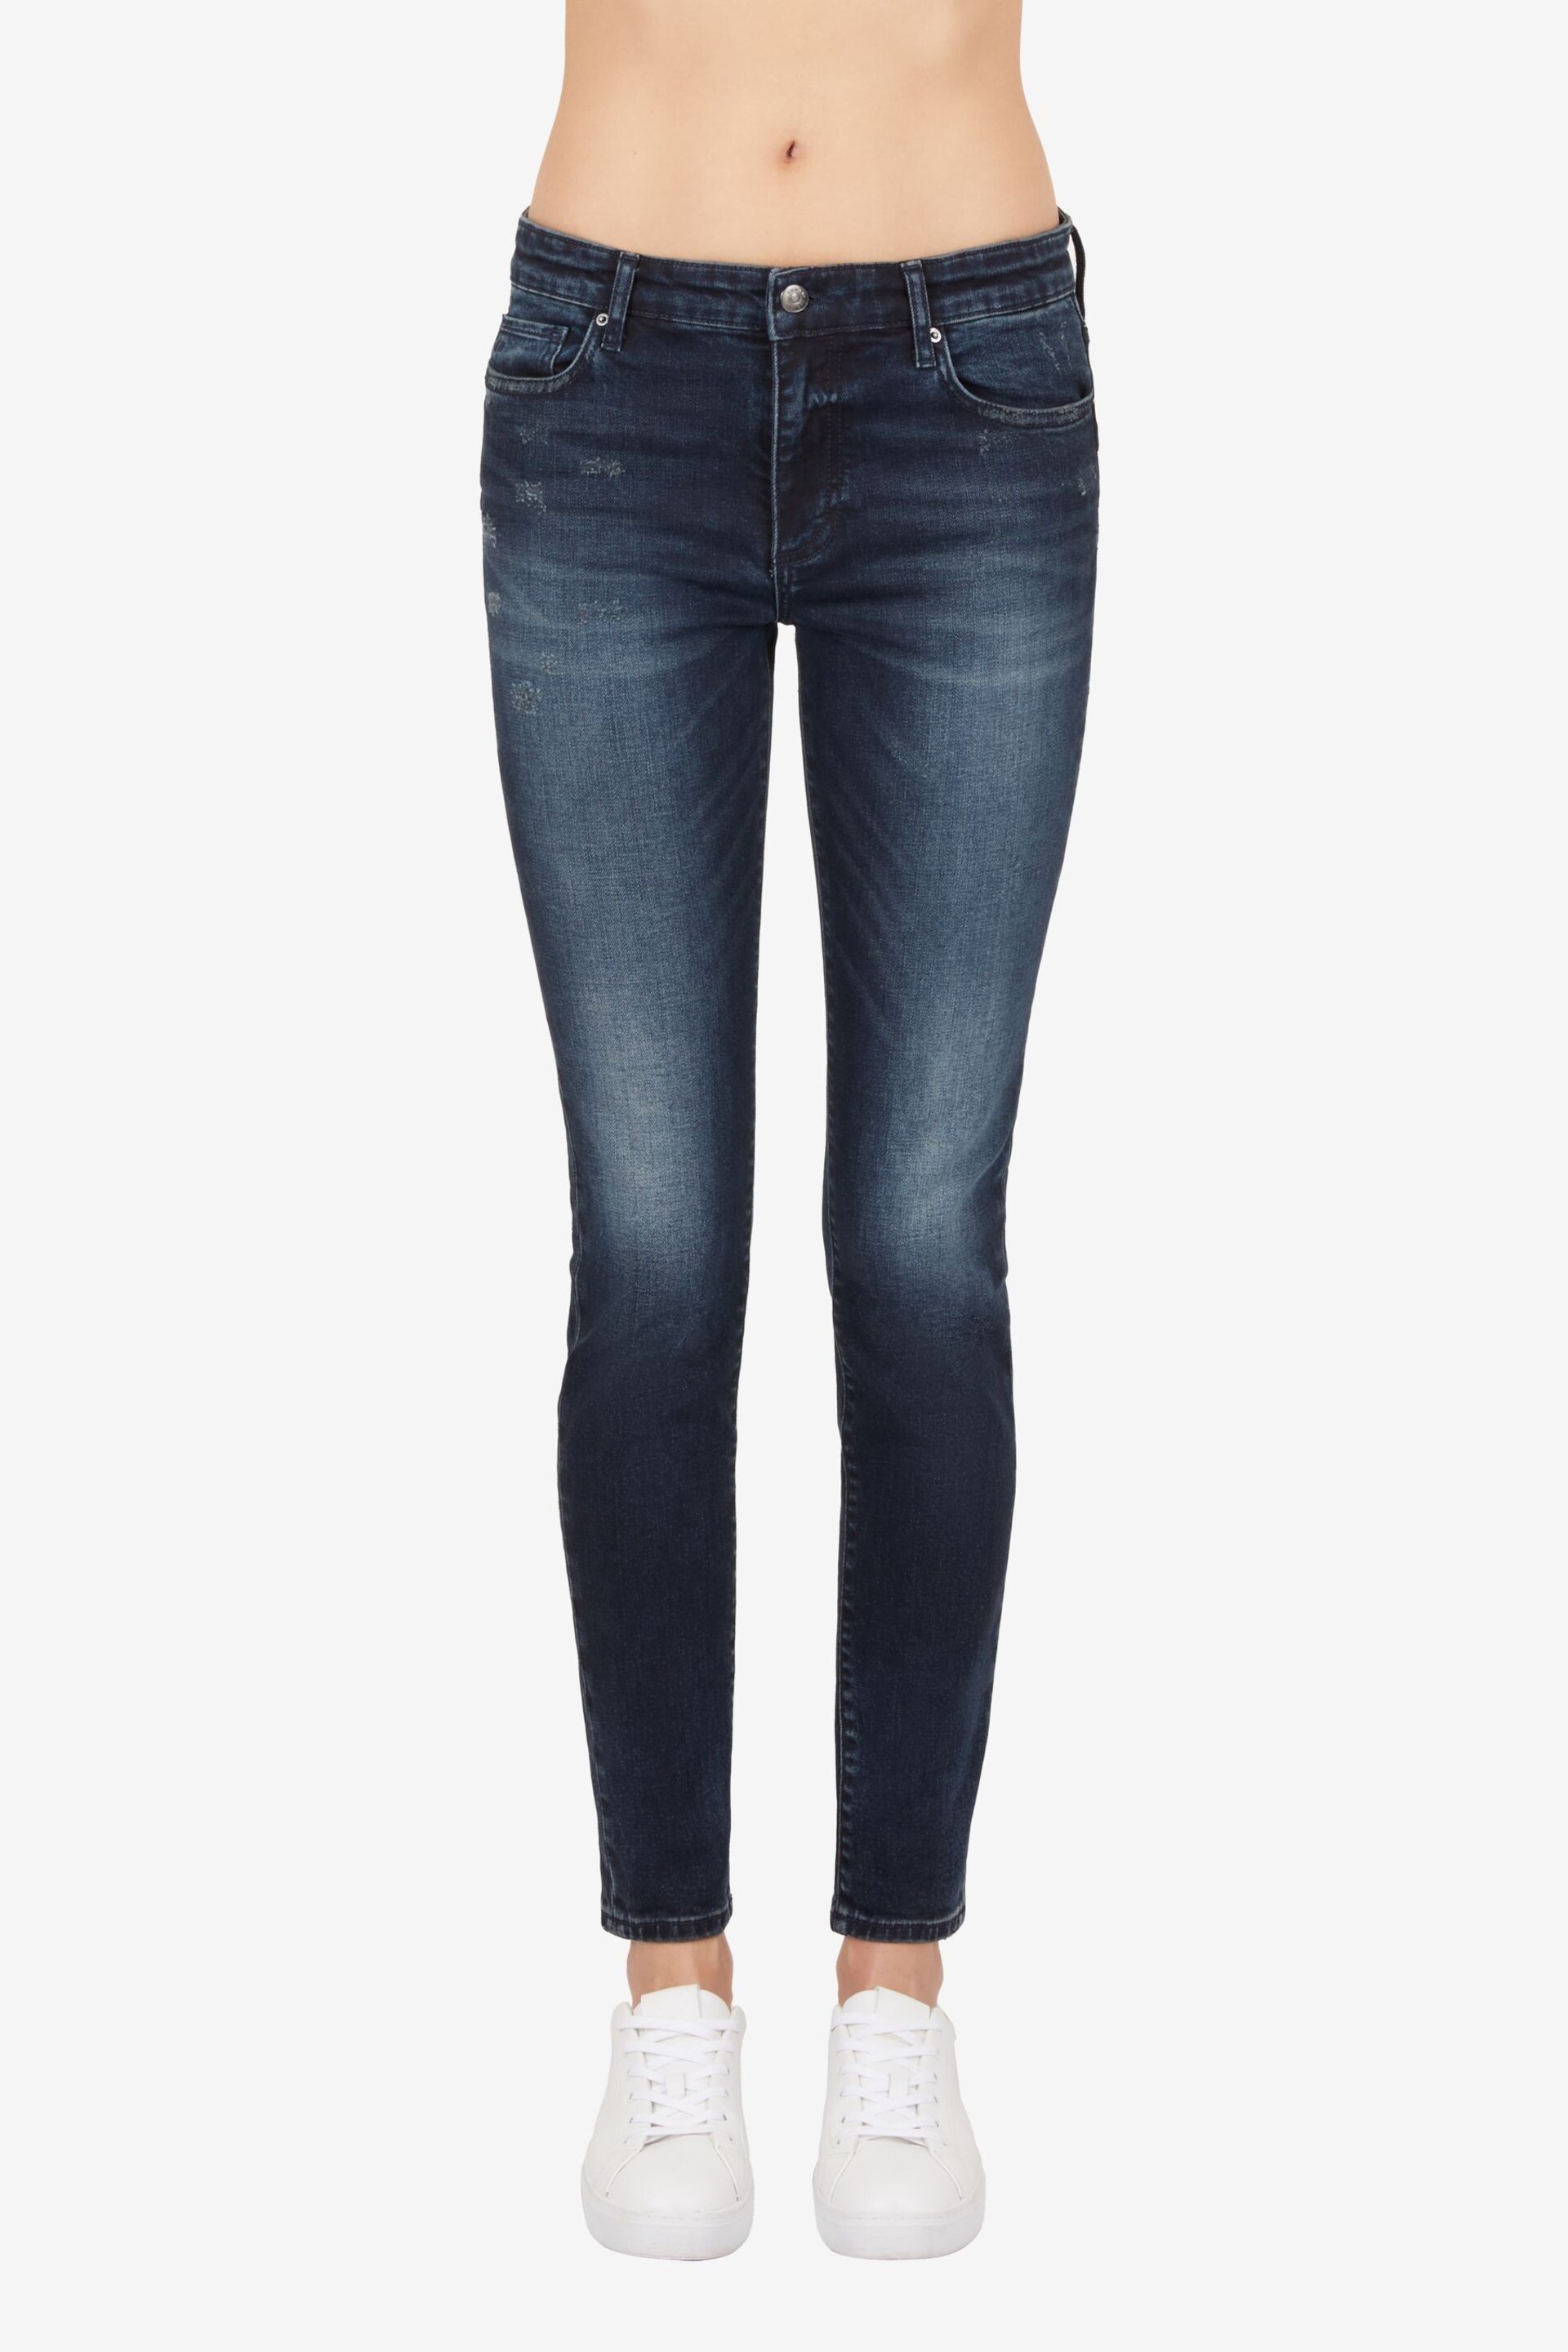 Armani Exchange Denim Dark Wash J69 Skinny Fit Jeans - Image 1 of 5